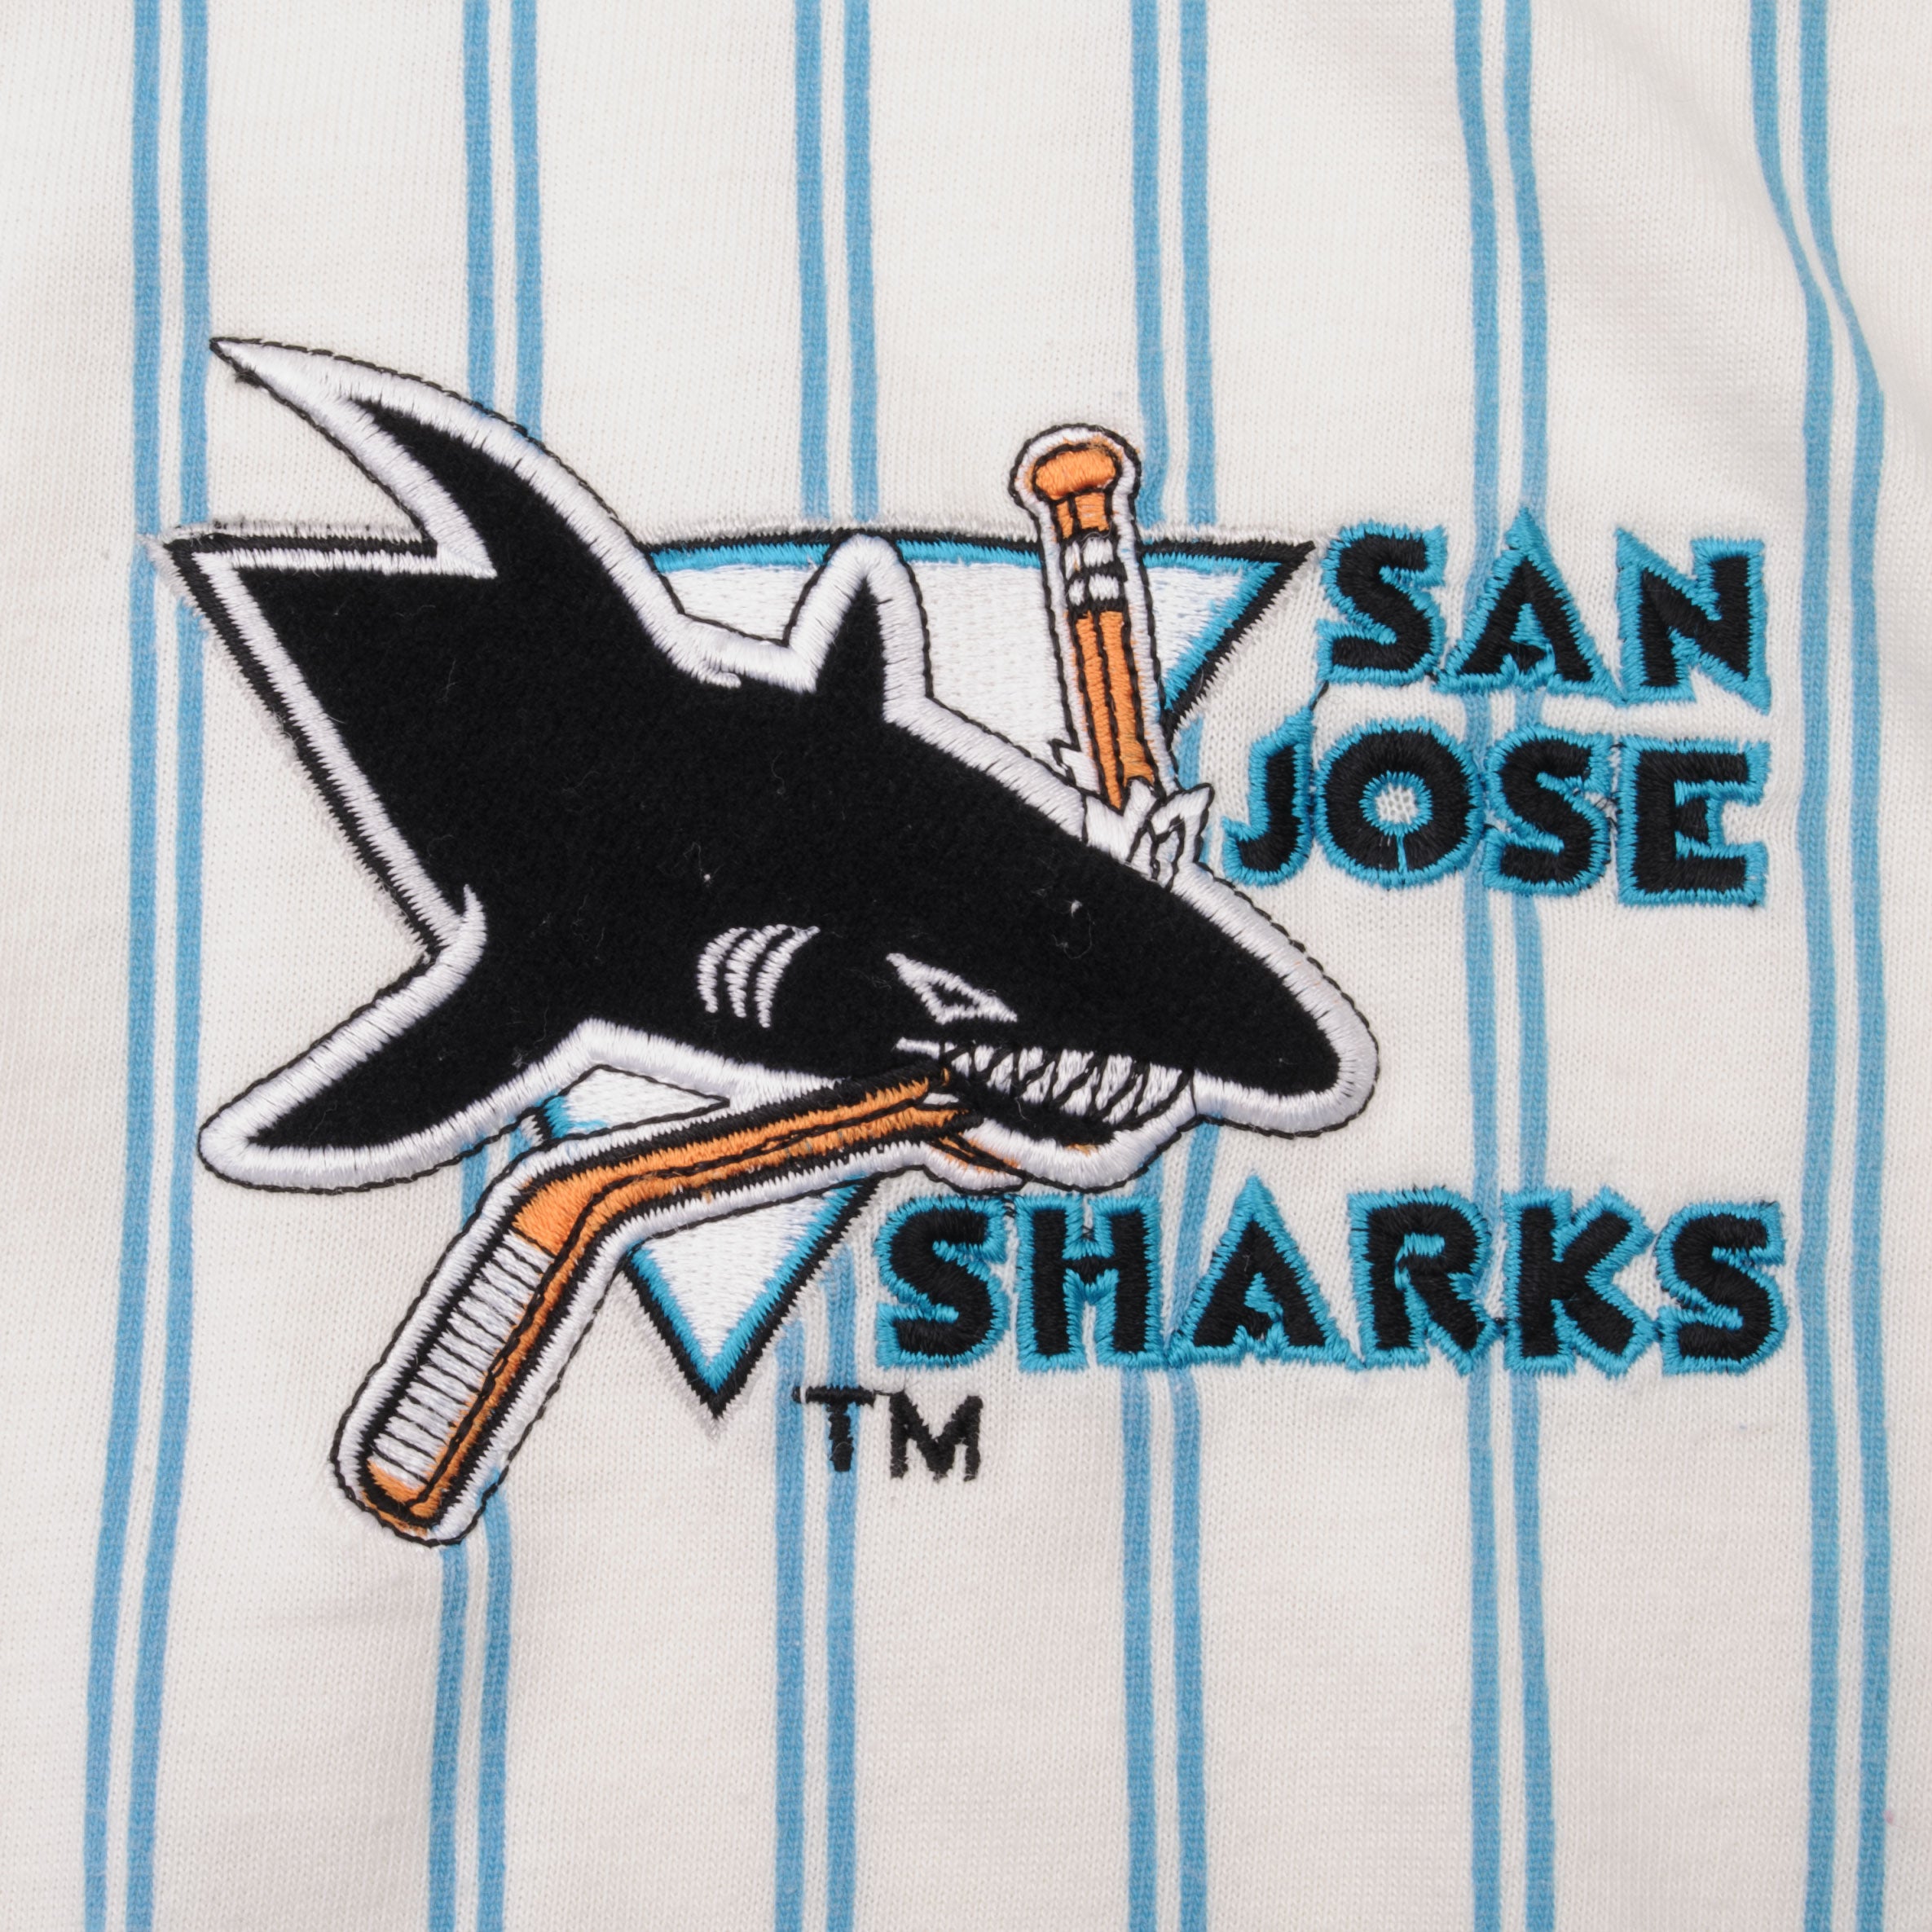 San Jose Sharks Rare Black Starter Jersey Medium